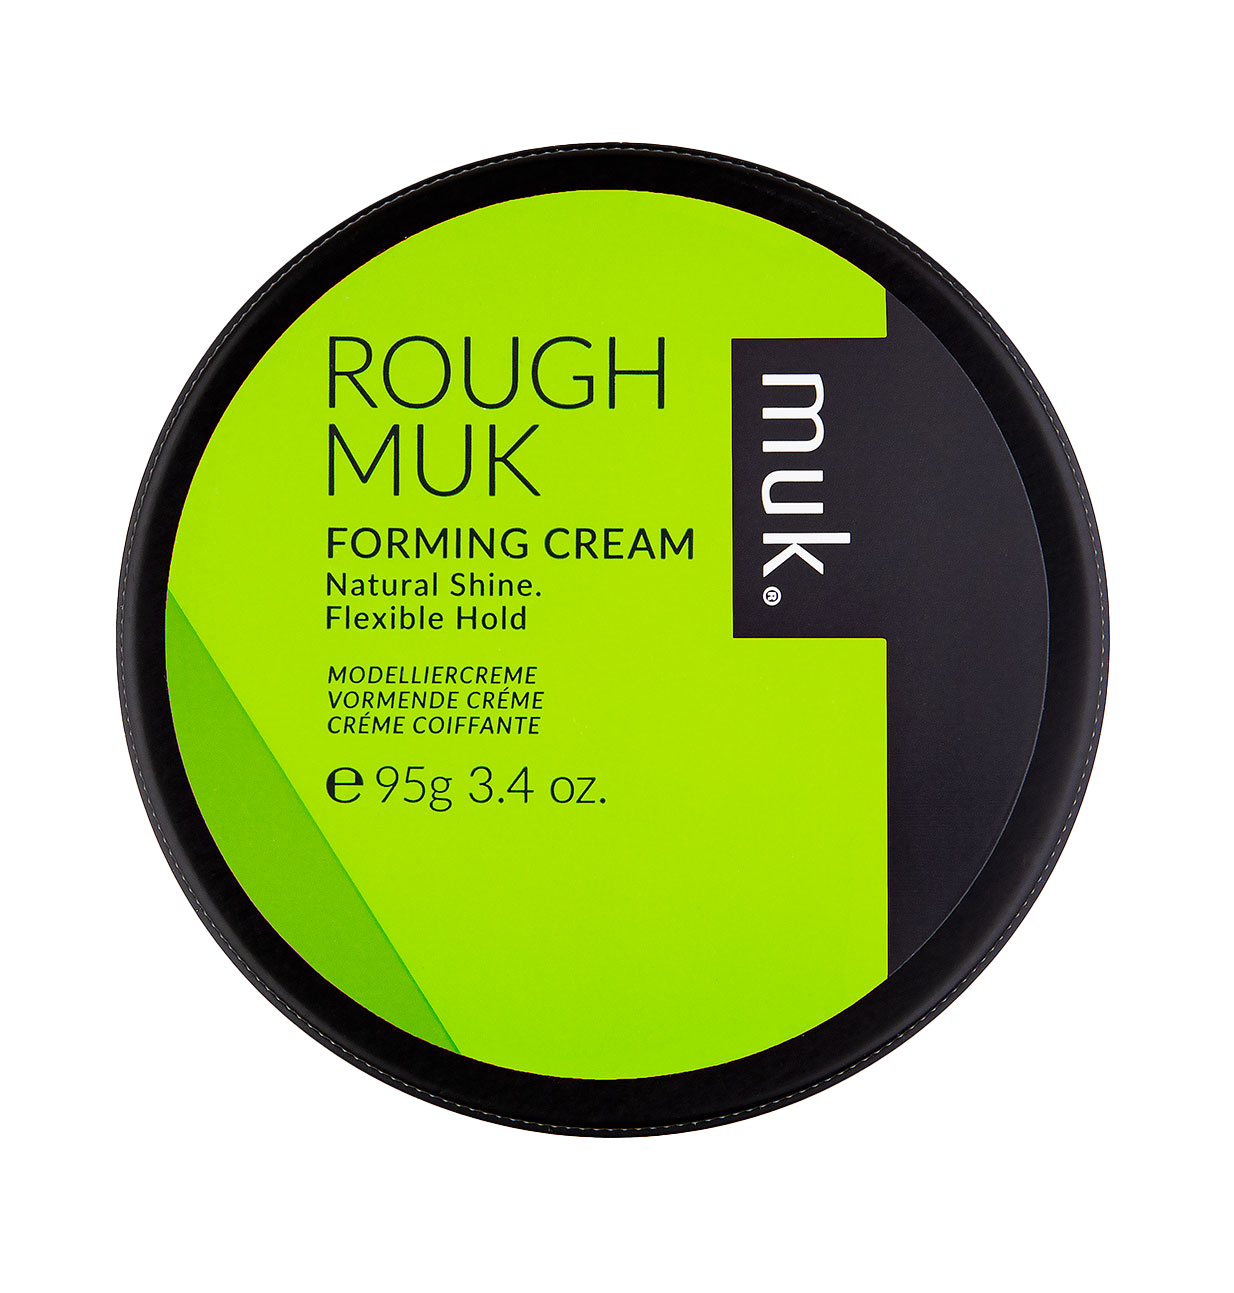 MUK Rough Forming Cream Duo Pack